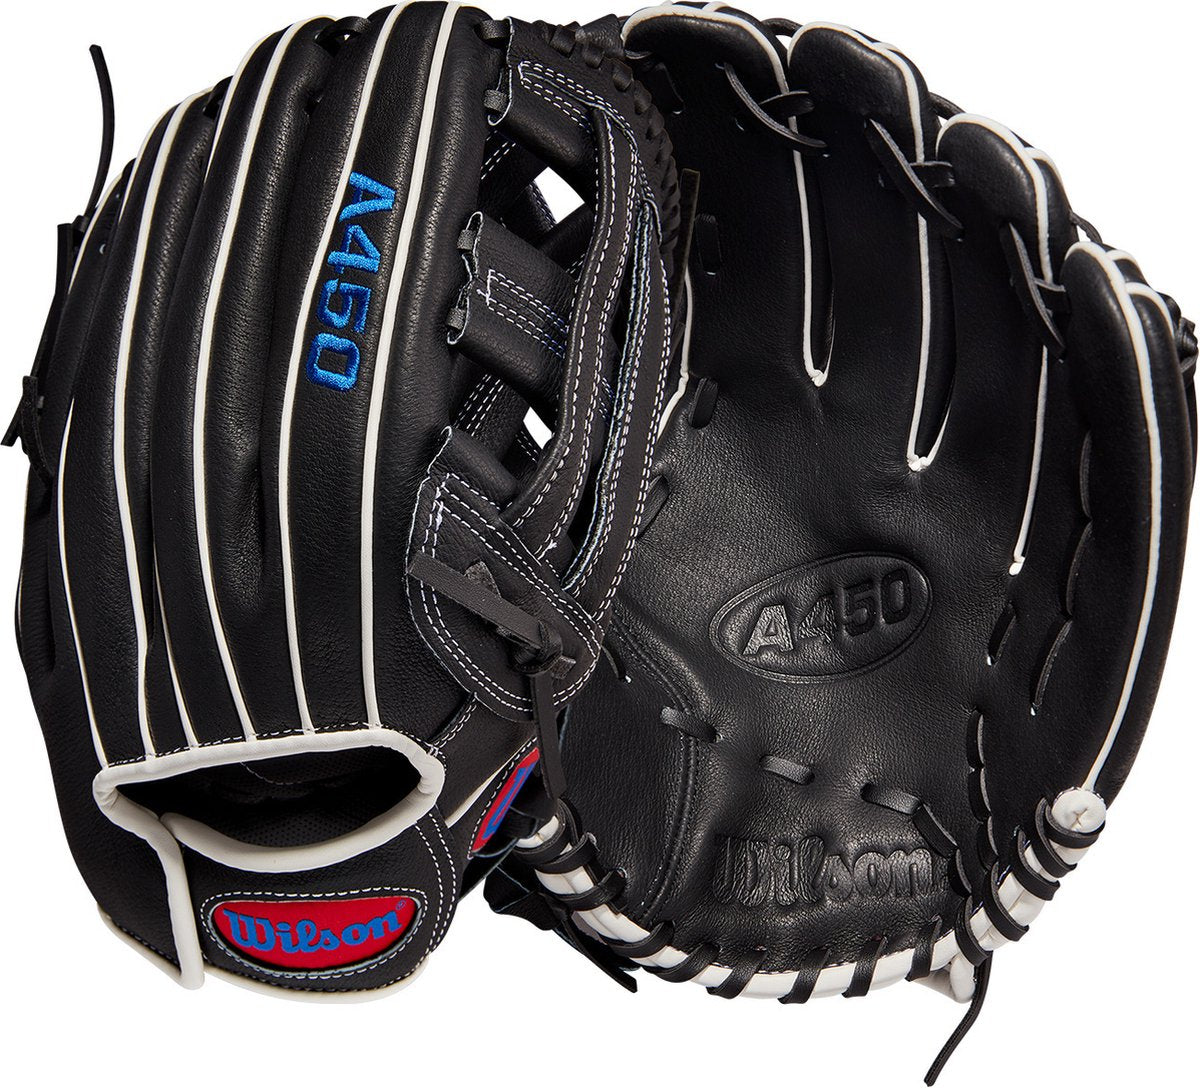 Baseball glove - A450 - Youth - 12 inches